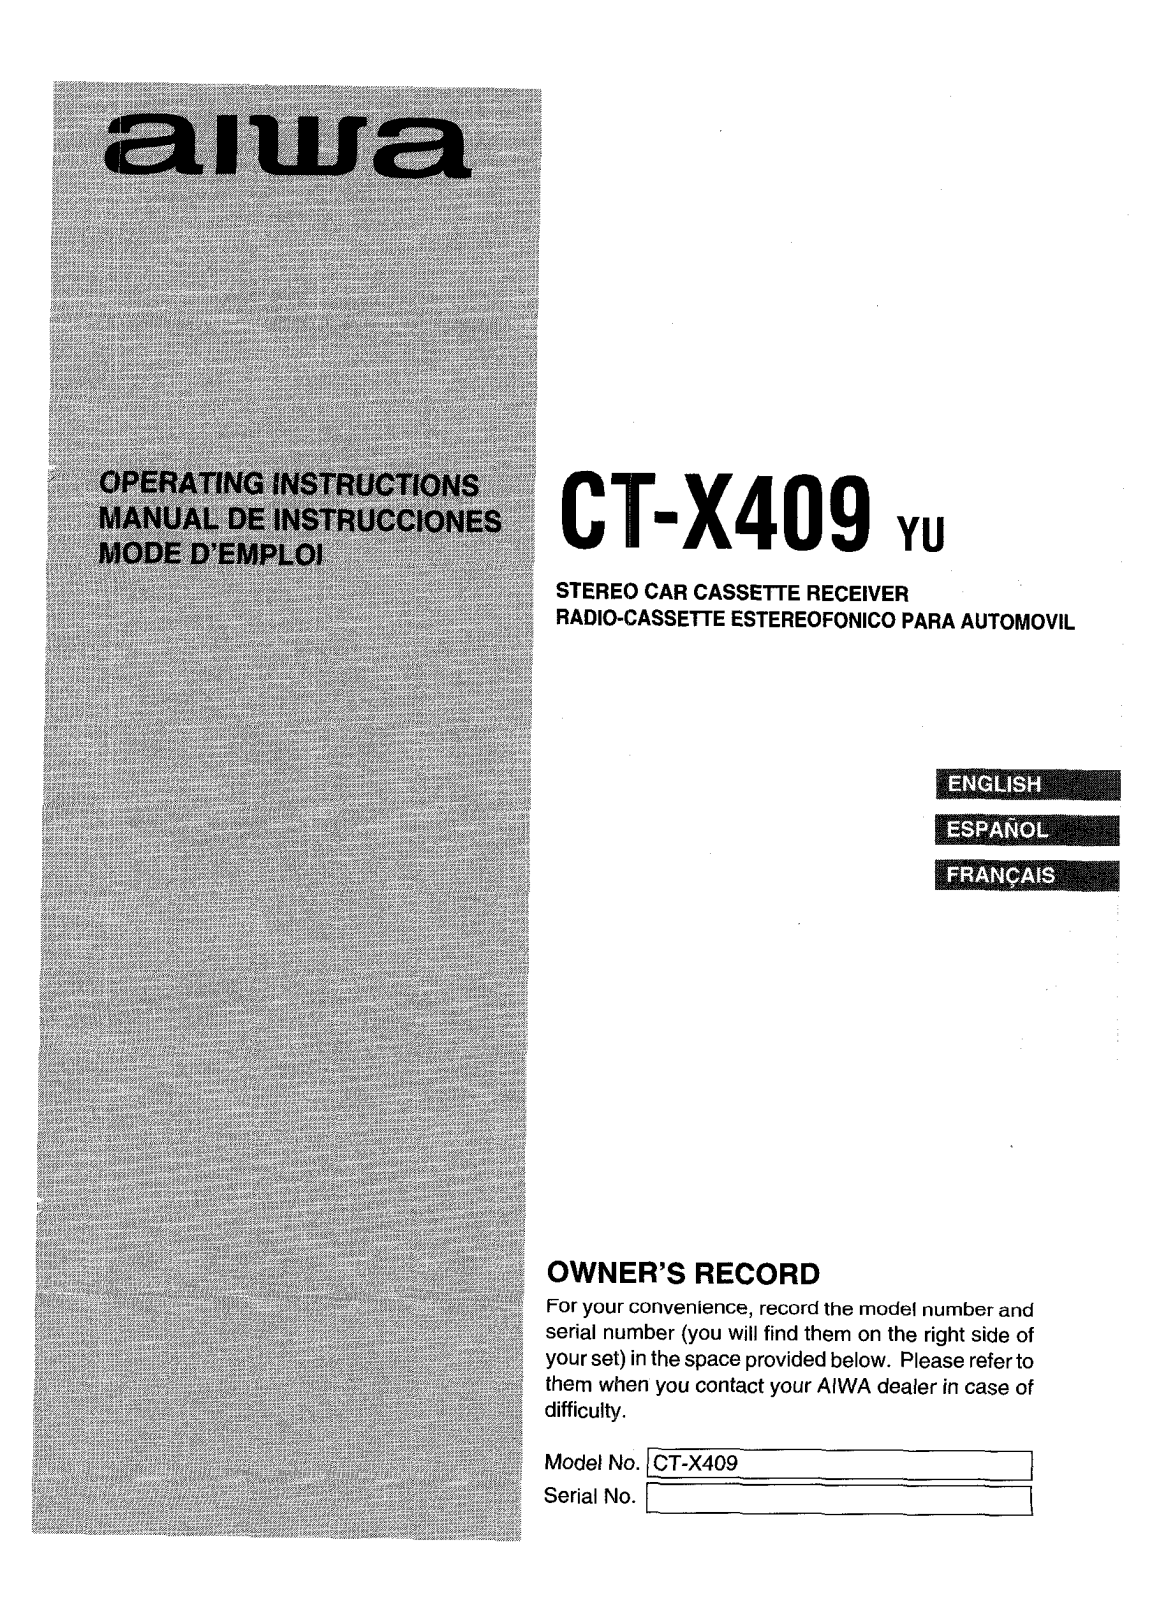 Sony CTX409yu Operating Manual